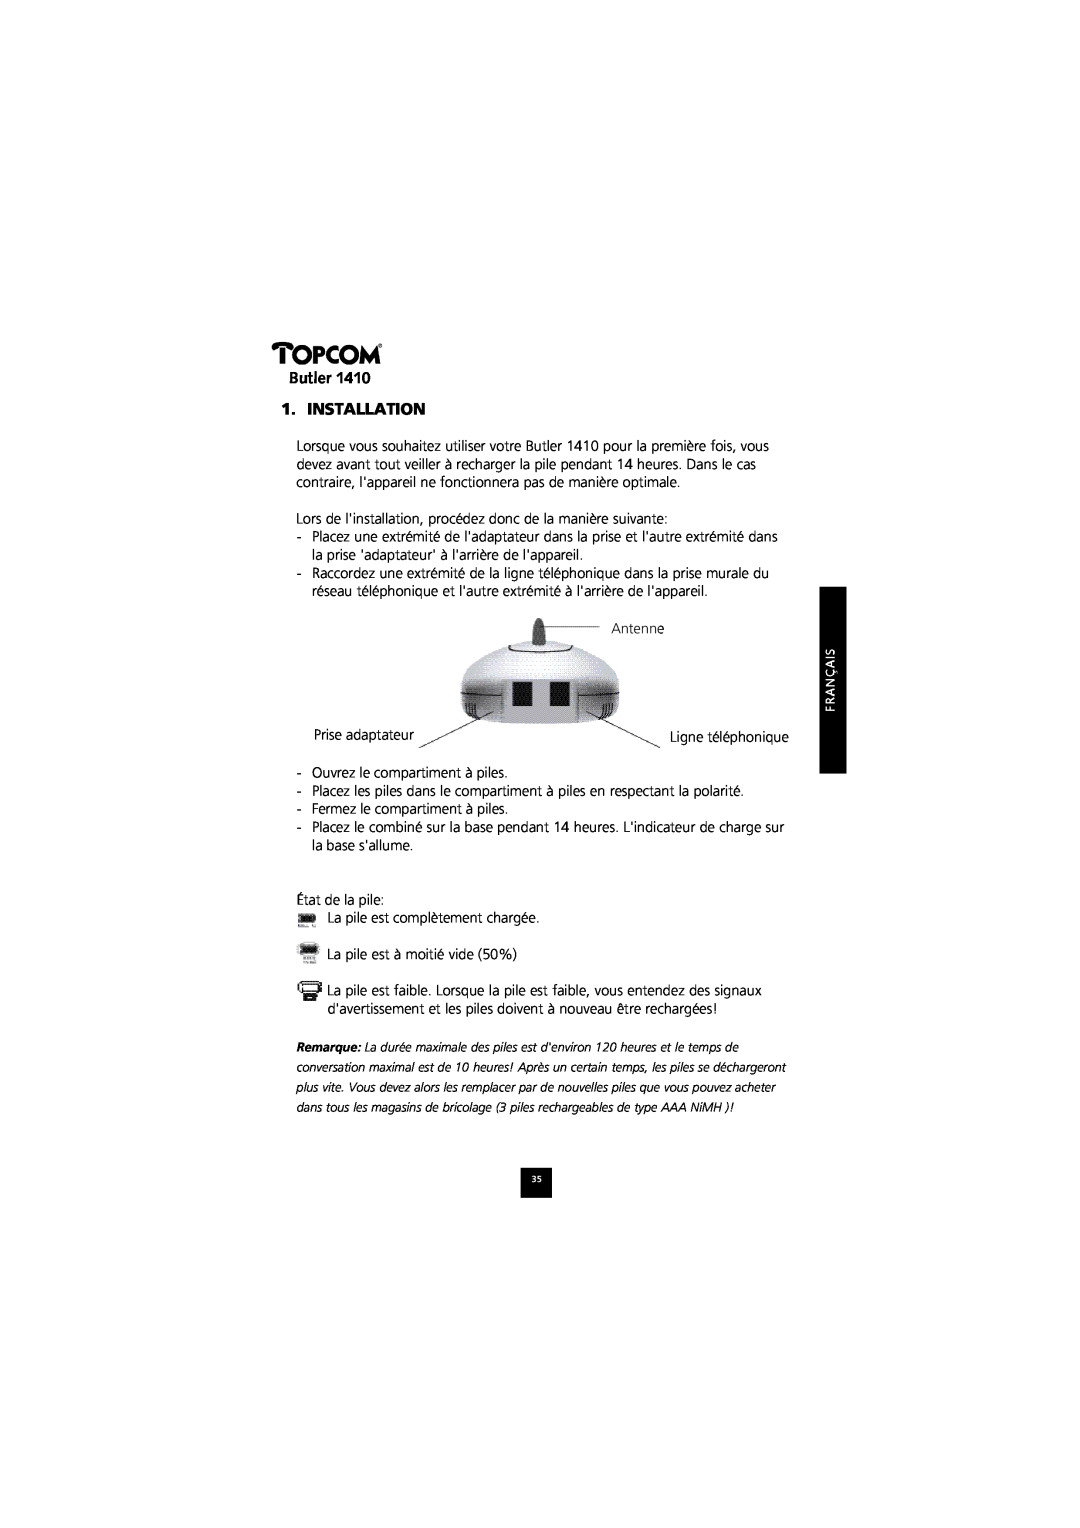 Topcom 1410 manual Butler 1. INSTALLATION, Ligne téléphonique 